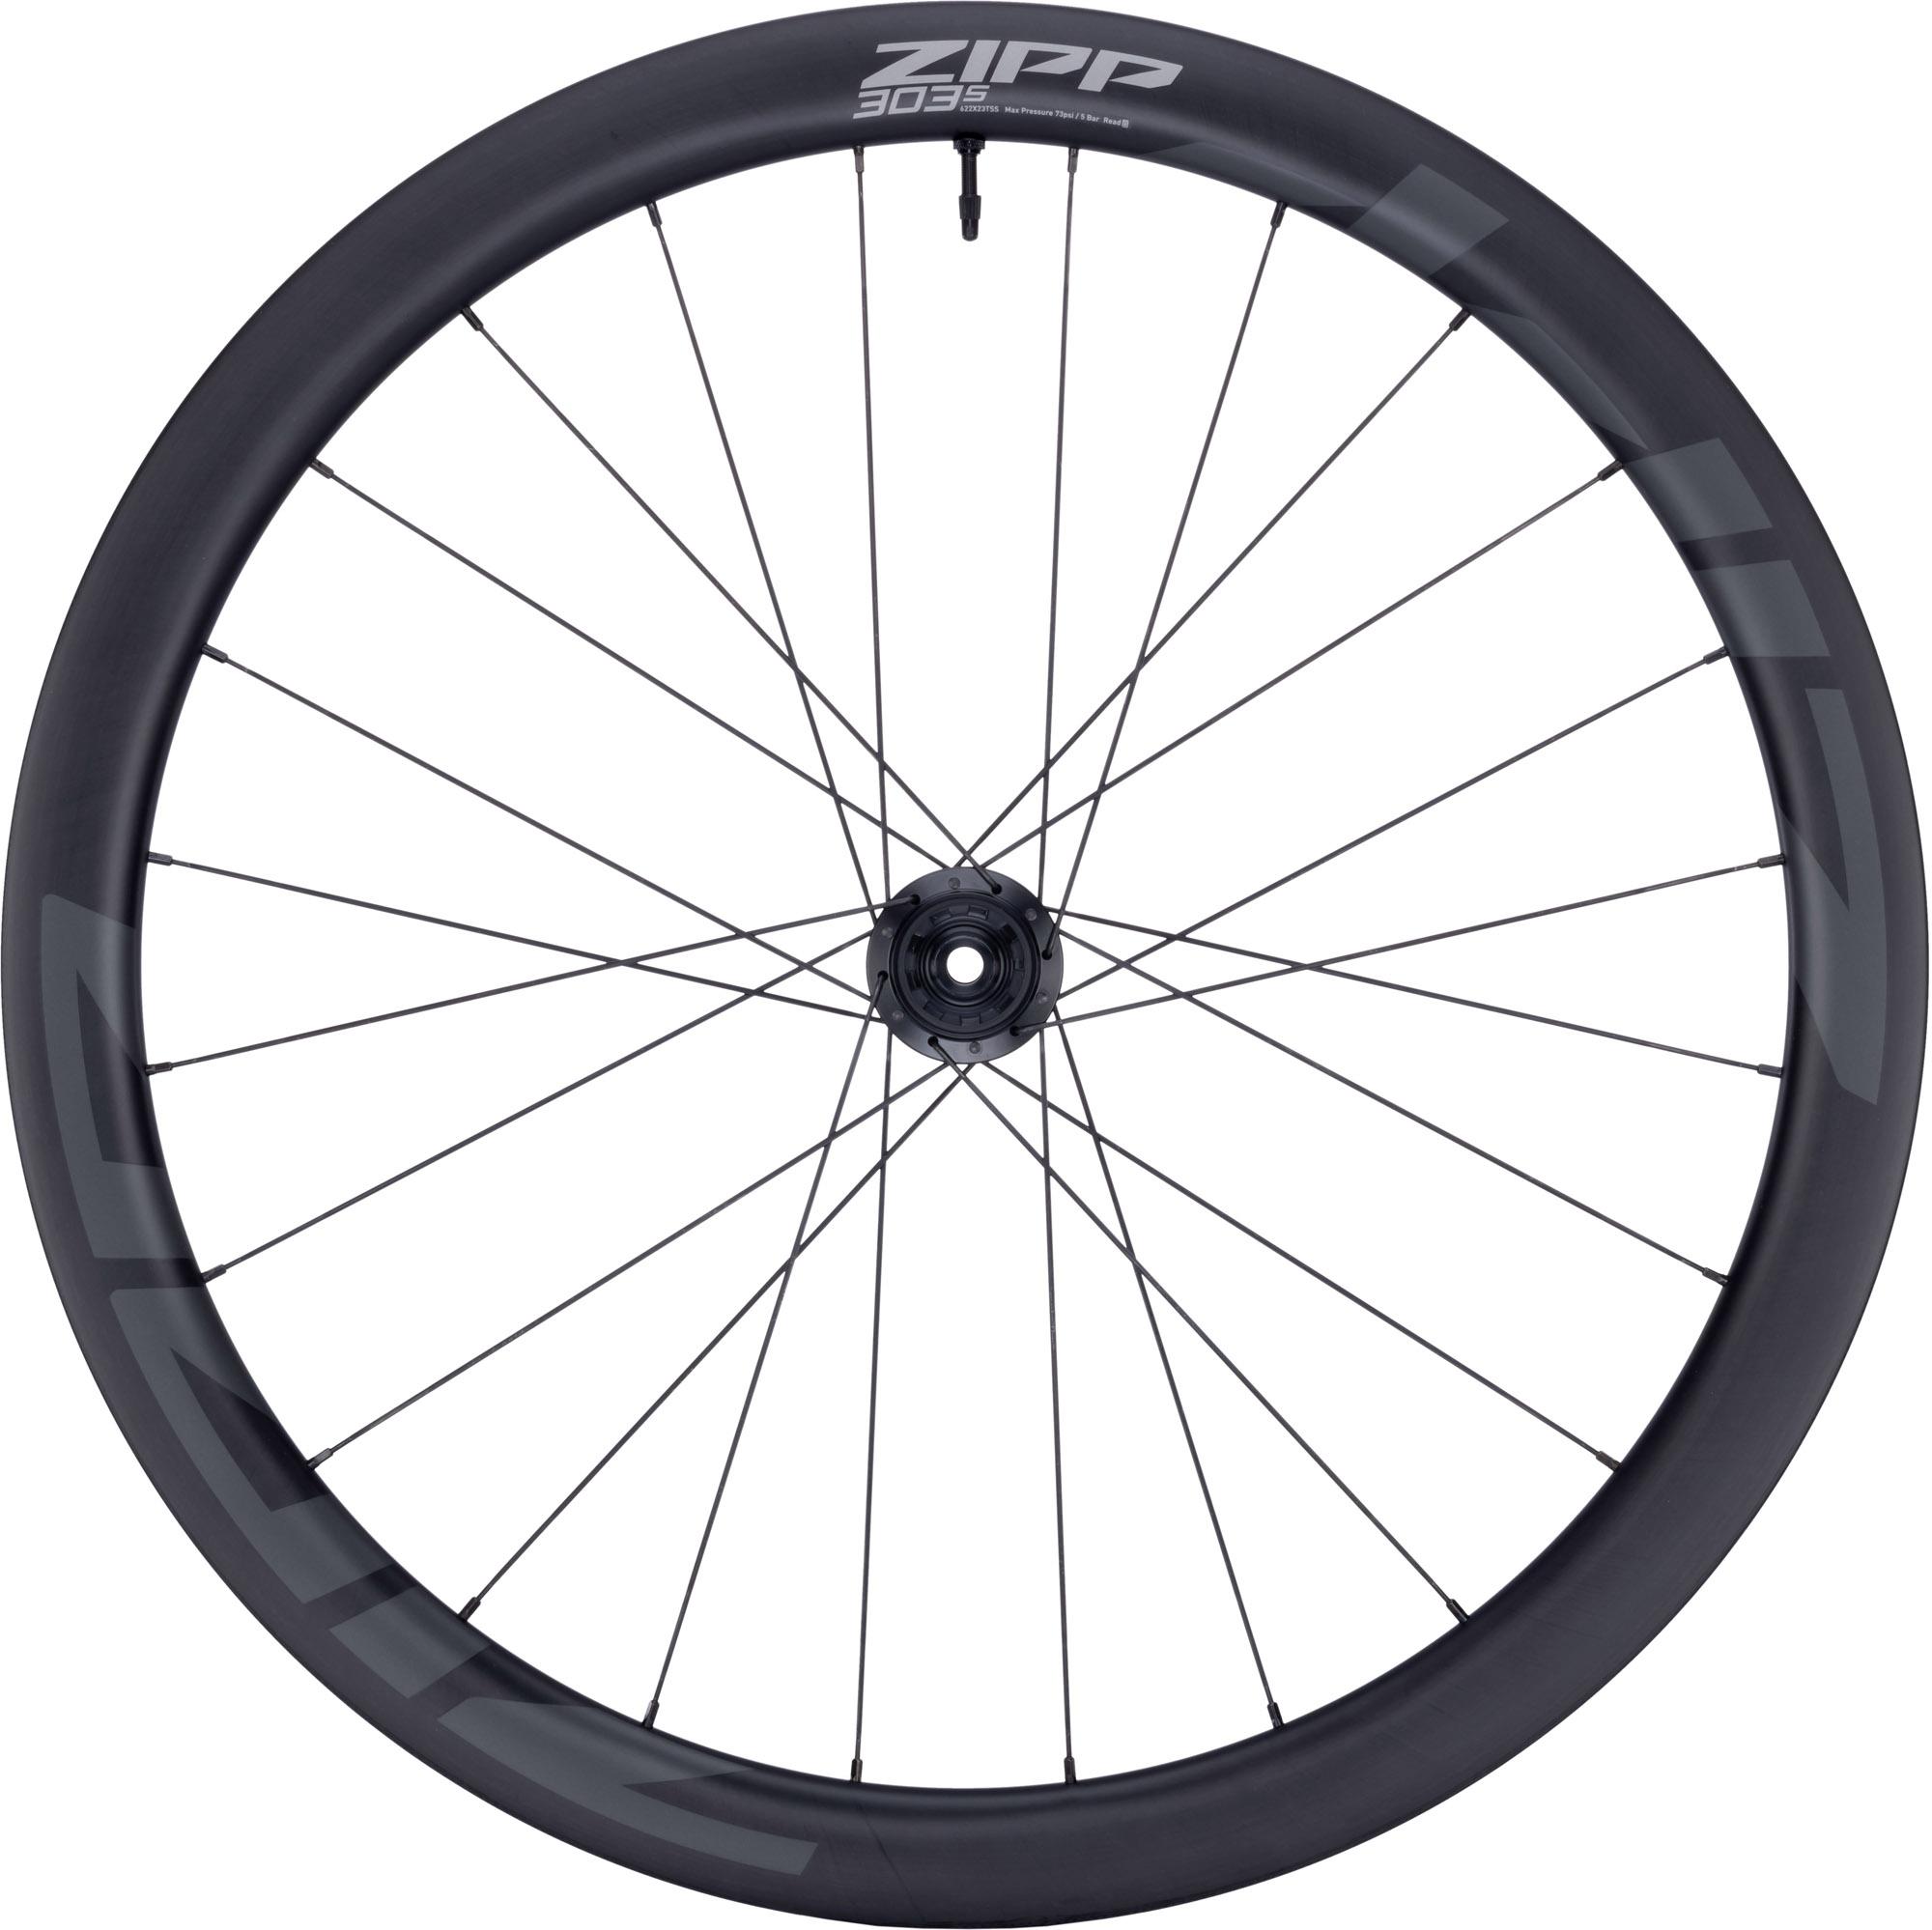 Zipp 303 S Carbon Disc Rear Road Wheel - Black